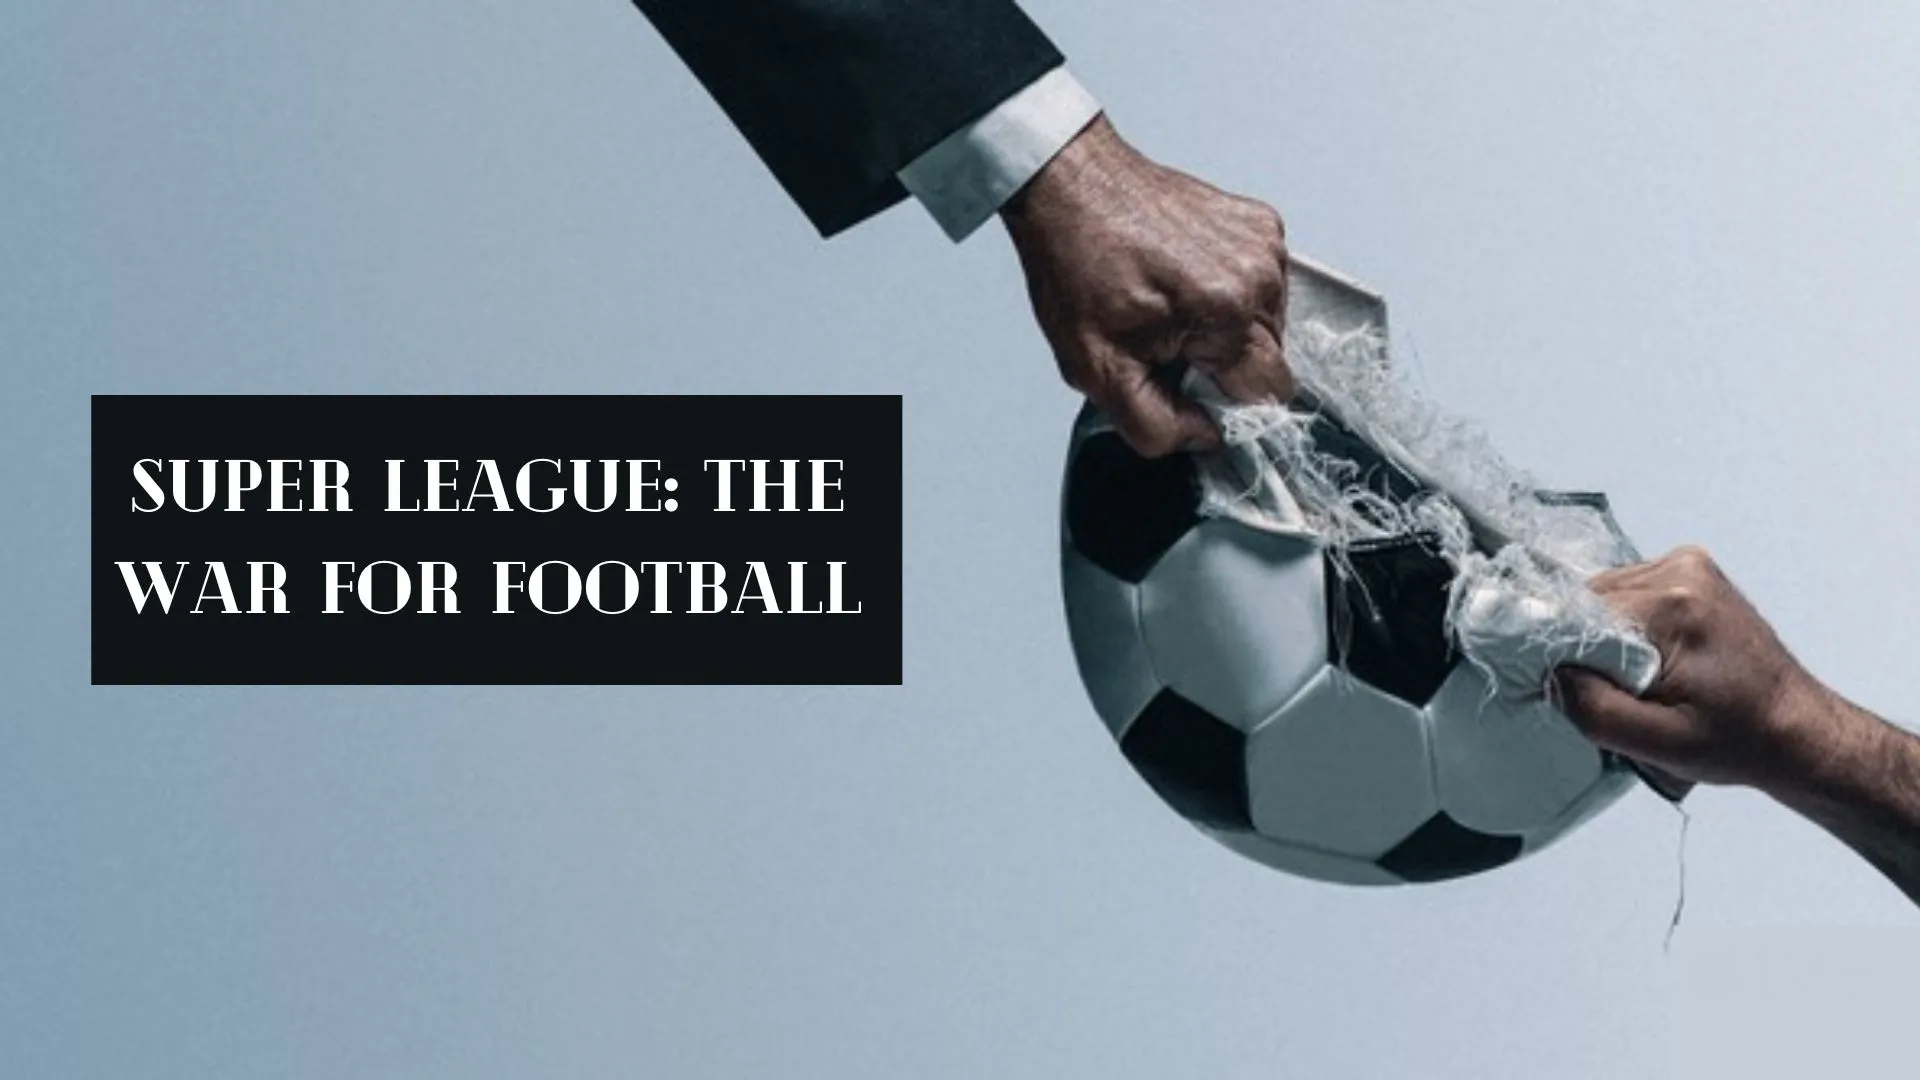 Super League: The War for Football Parents Guide